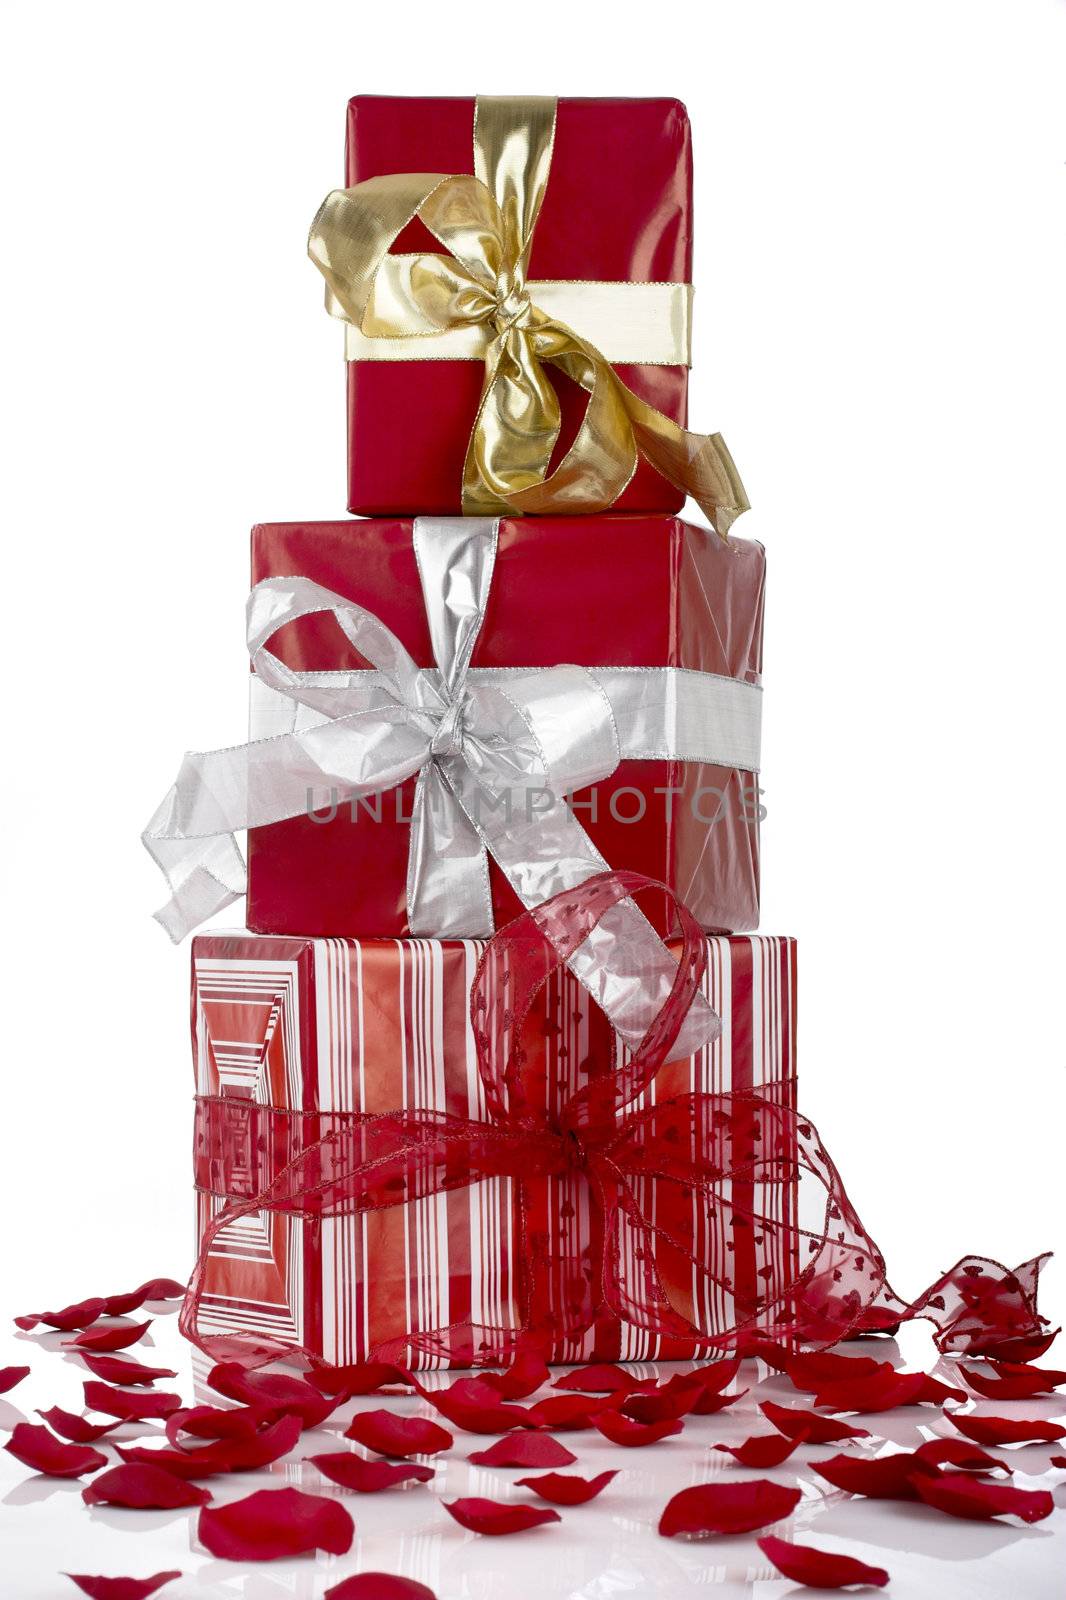 Christmas season! Beautiful Gift boxes with rose petals